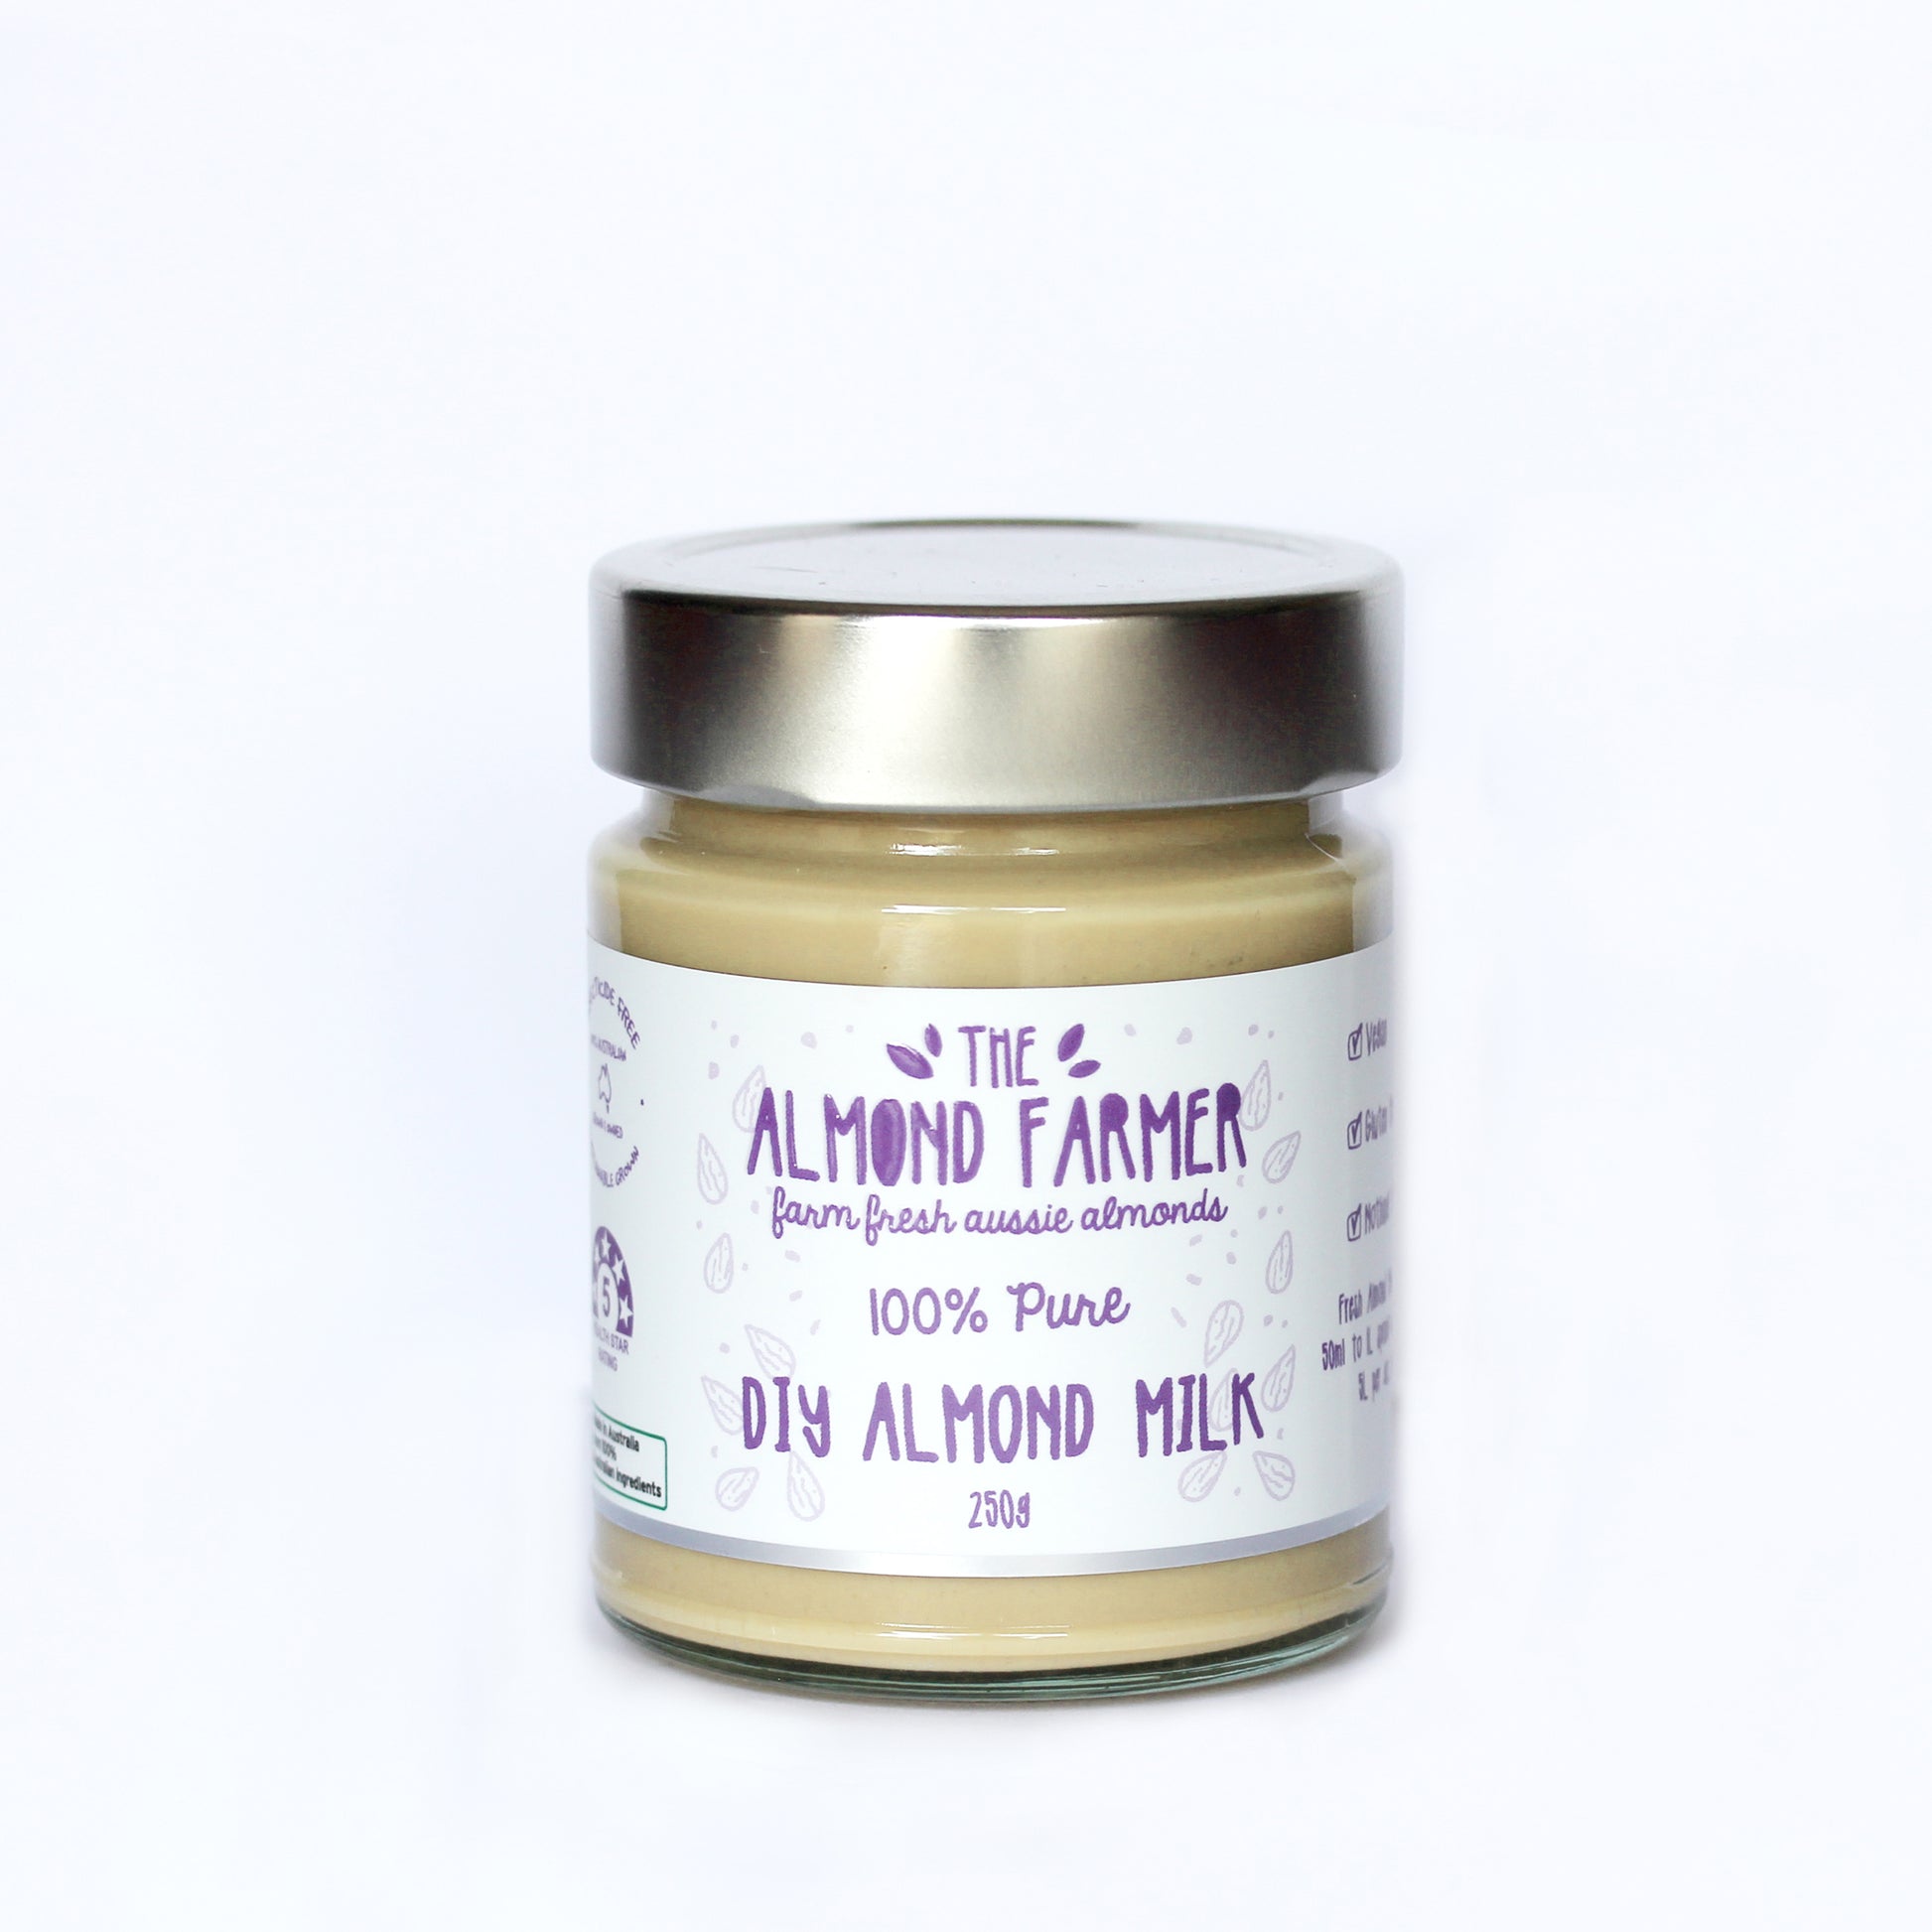 DIY Almond Milk - The Almond Farmer - 250g -